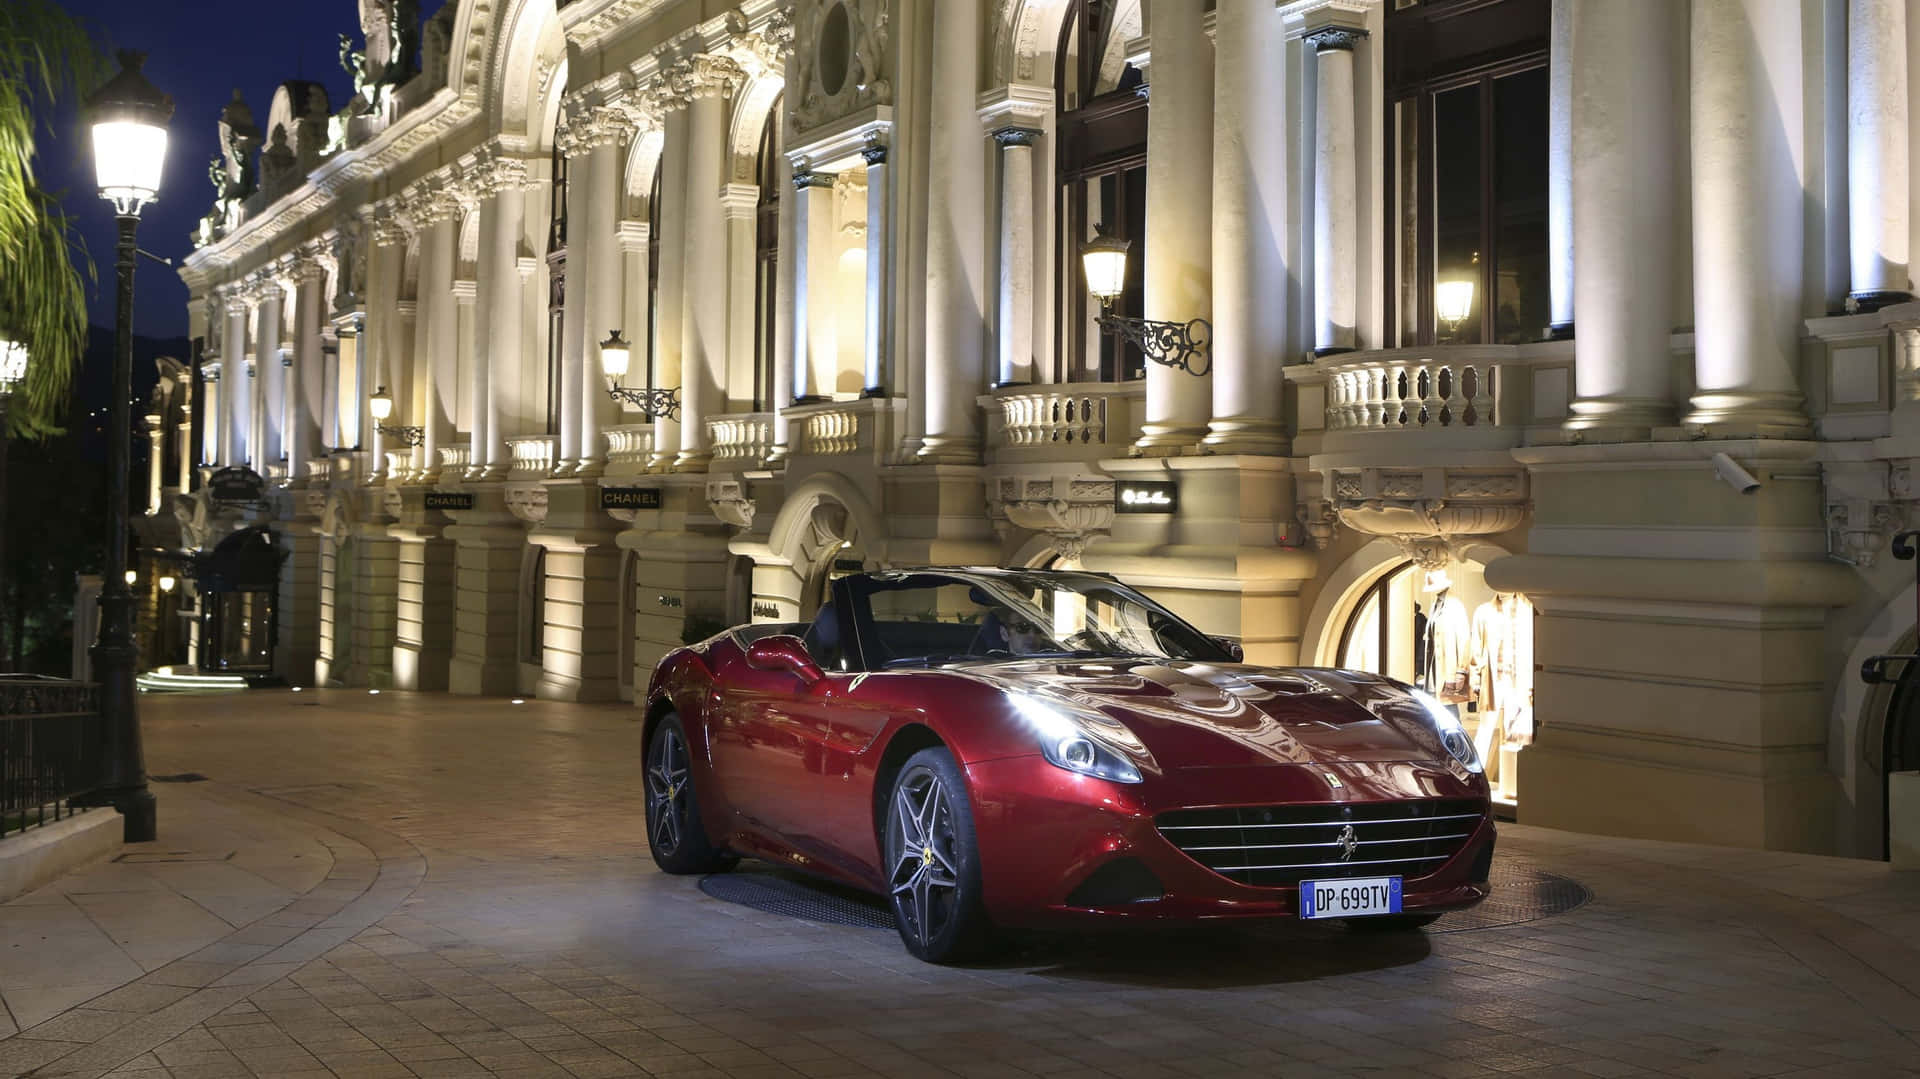 Caption: Stunning Red Ferrari California T in Motion Wallpaper